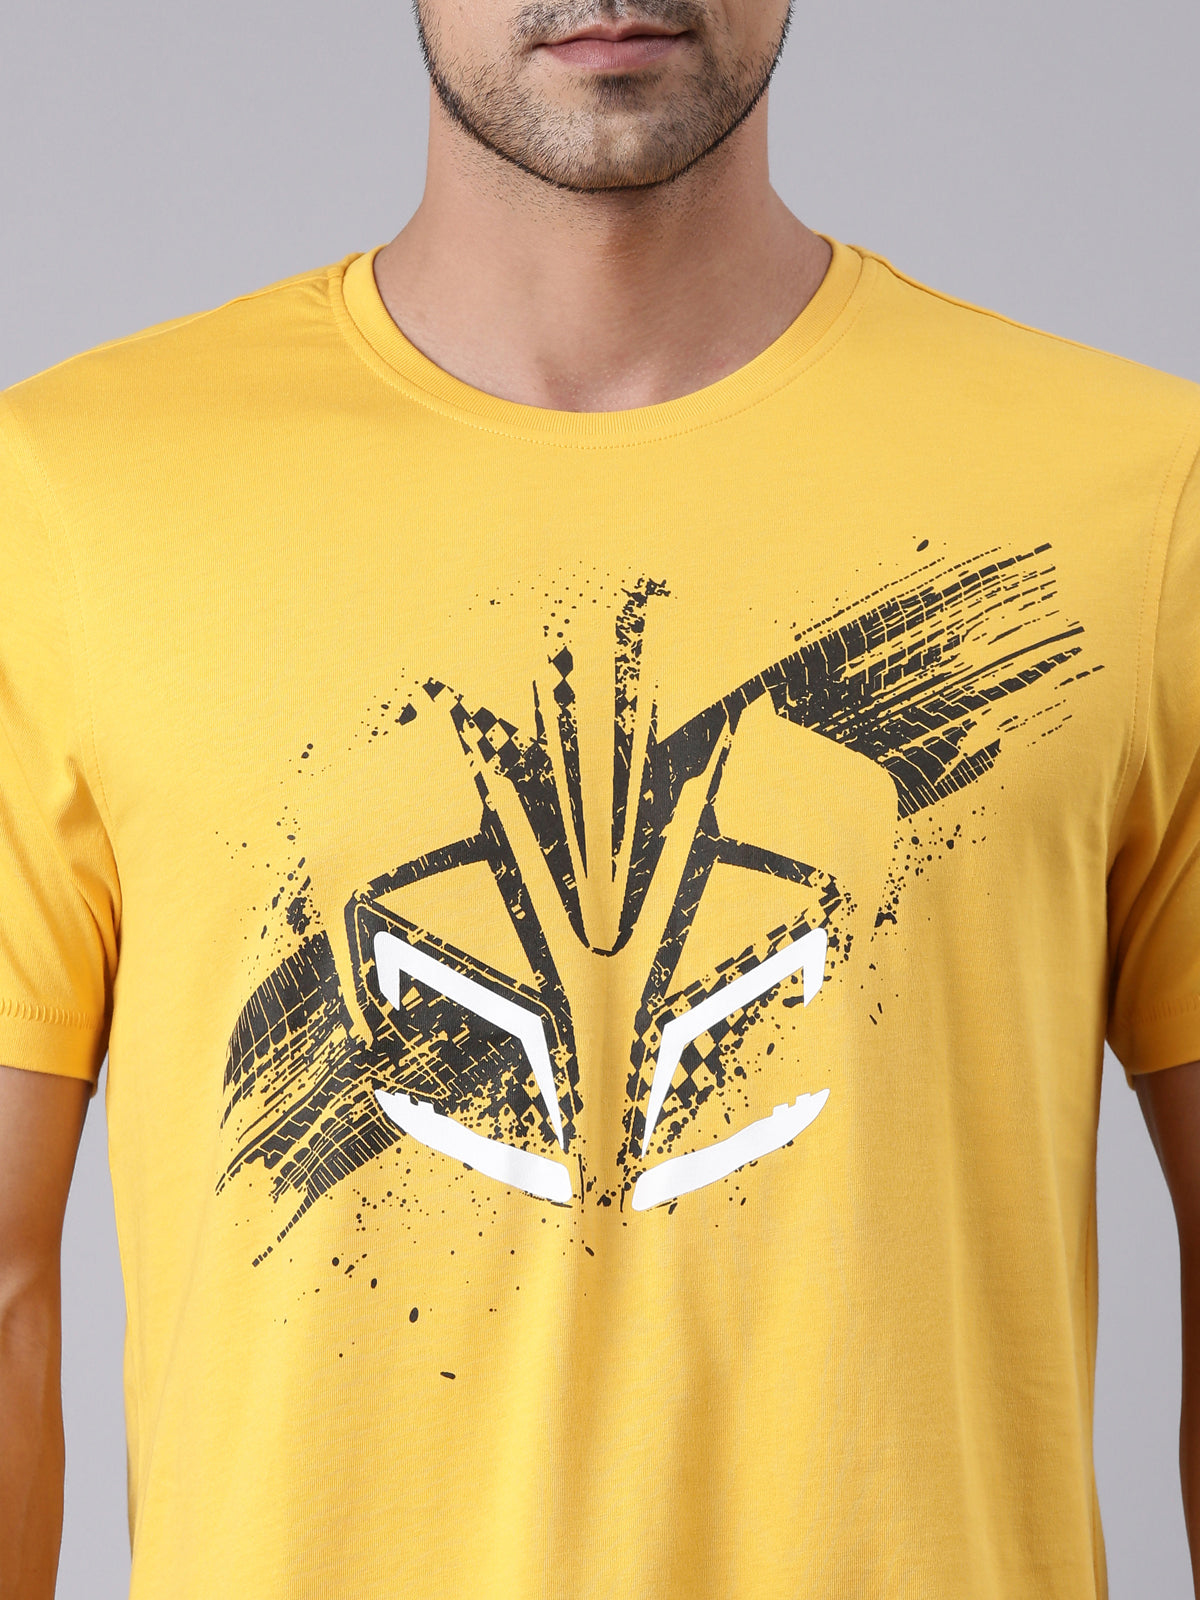  TVS Racing Fury Yellow Cyborg Crew neck T Shirt